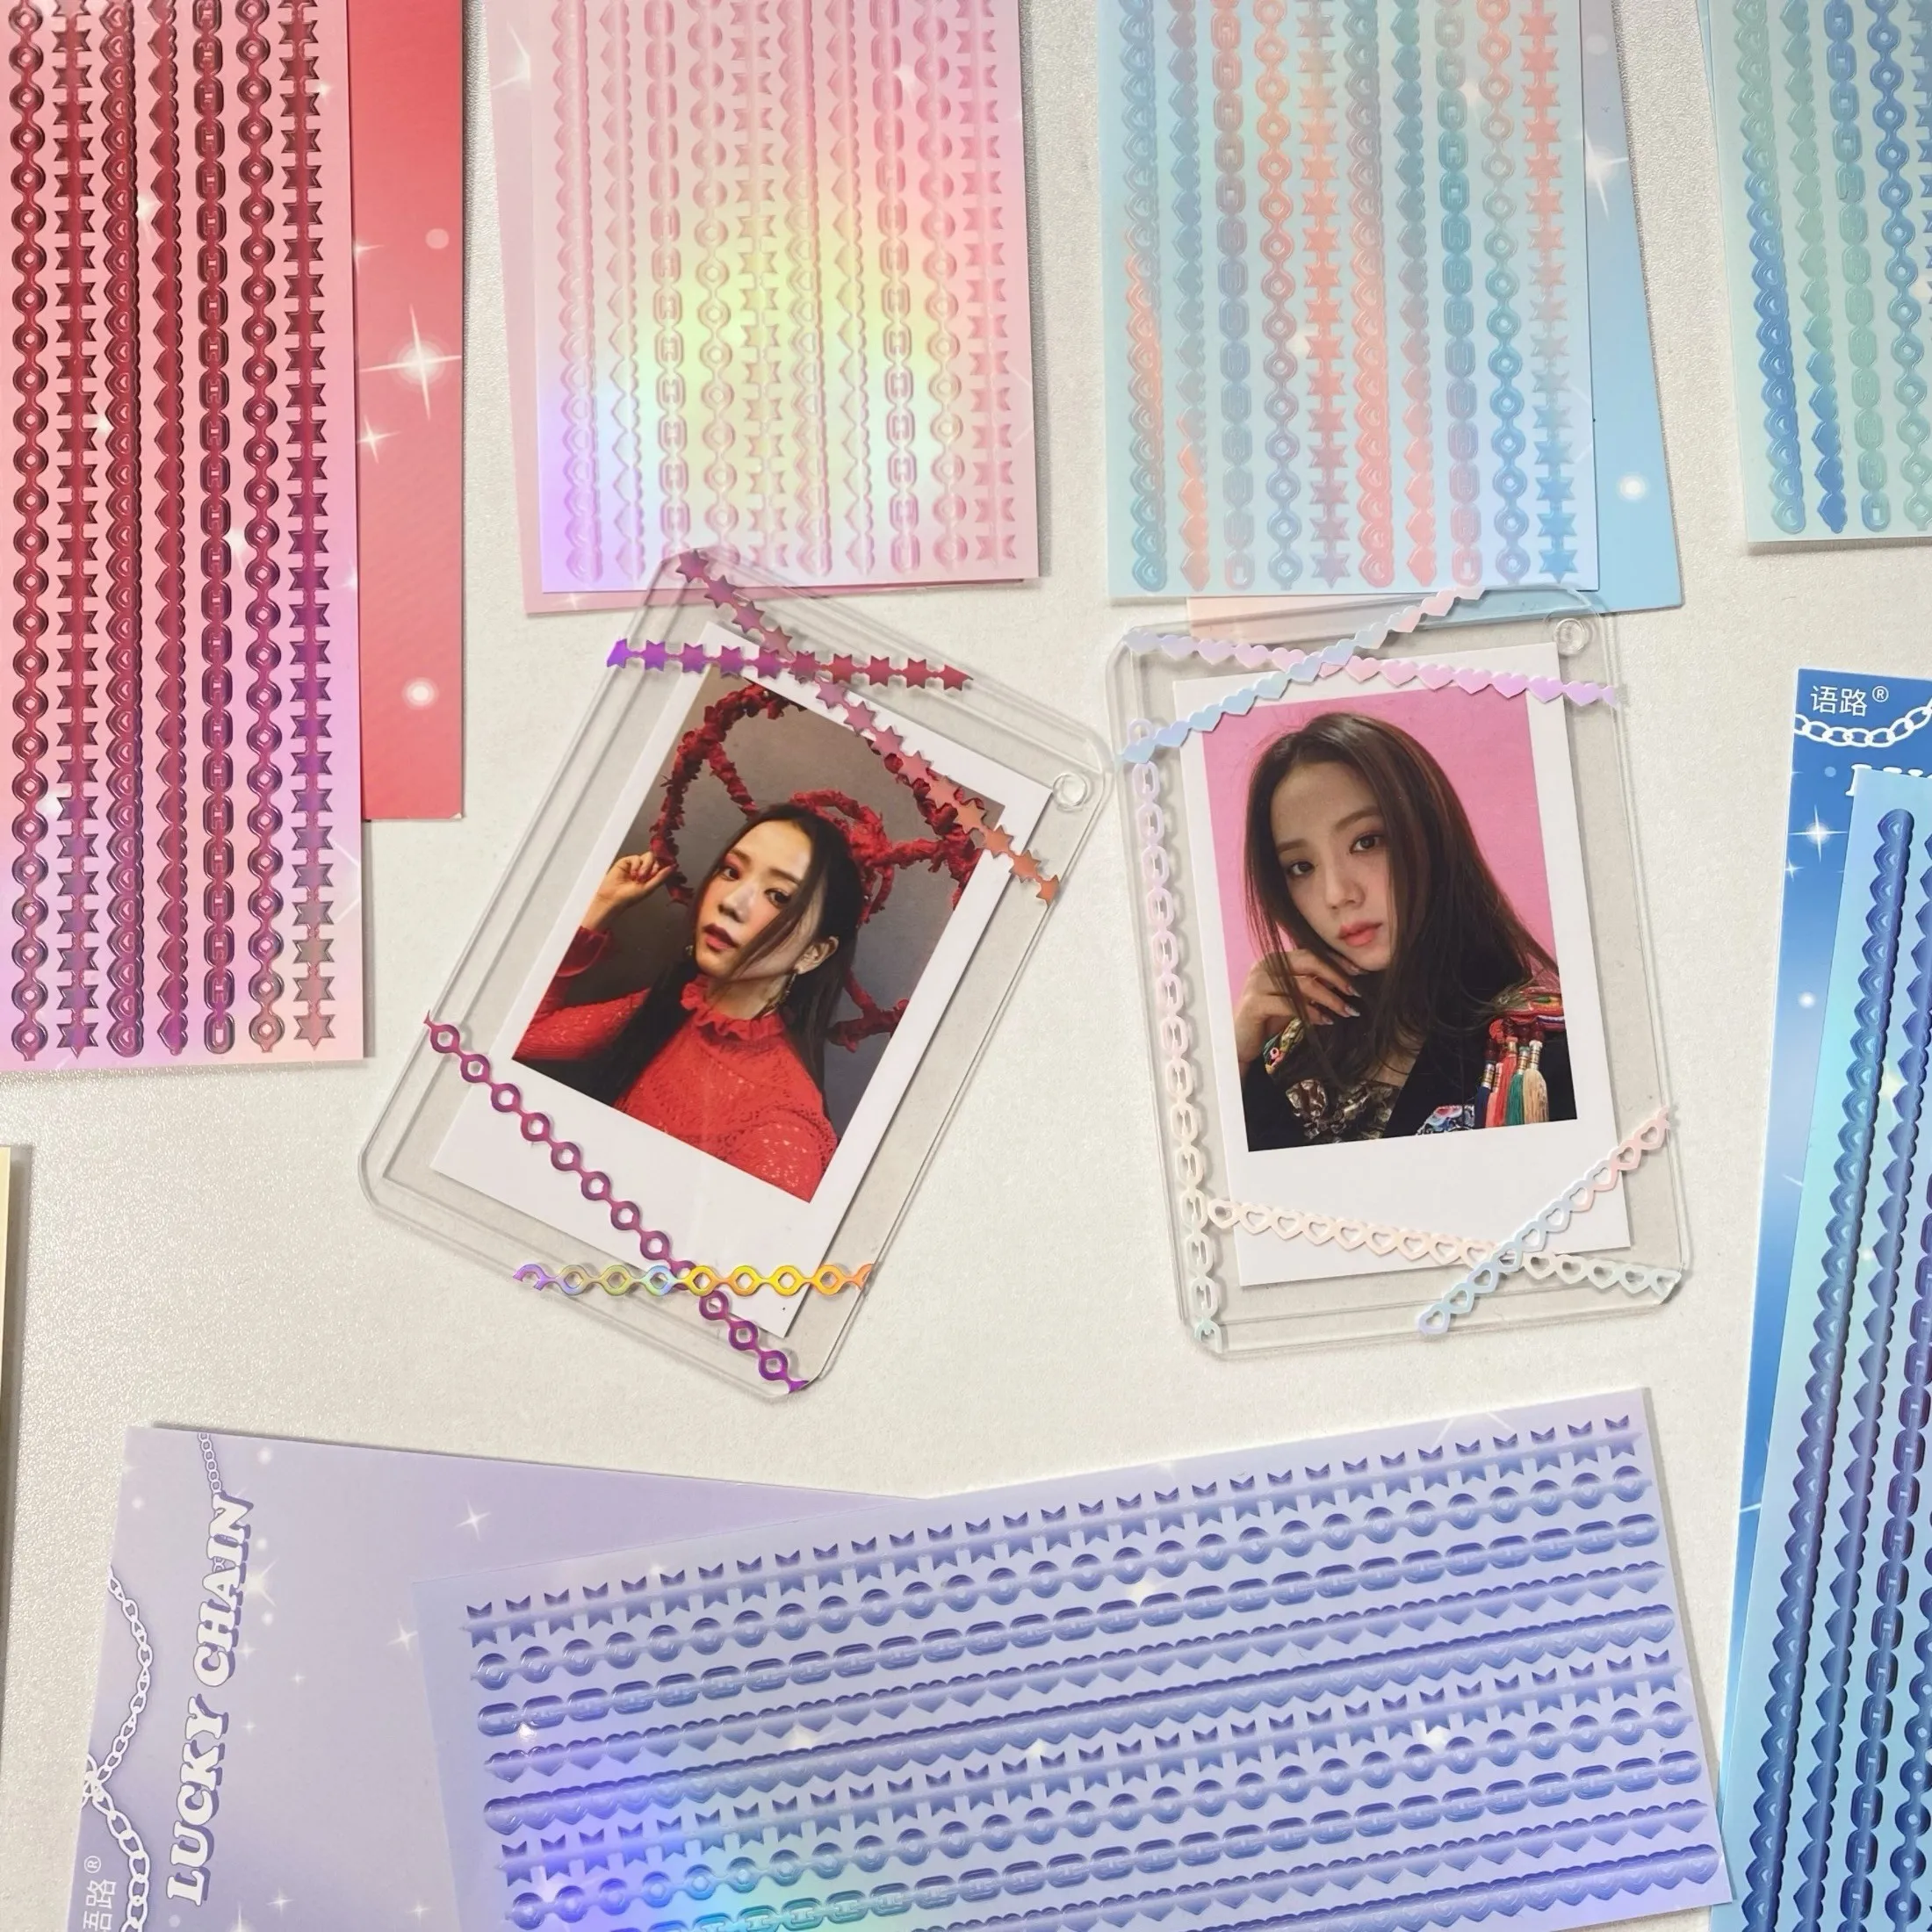 Kpop Laser Chains Decorative Sticker For Photocards Diy Adhensive Material Notebooks Agenda Postcards Gookca Kawaii Stationary